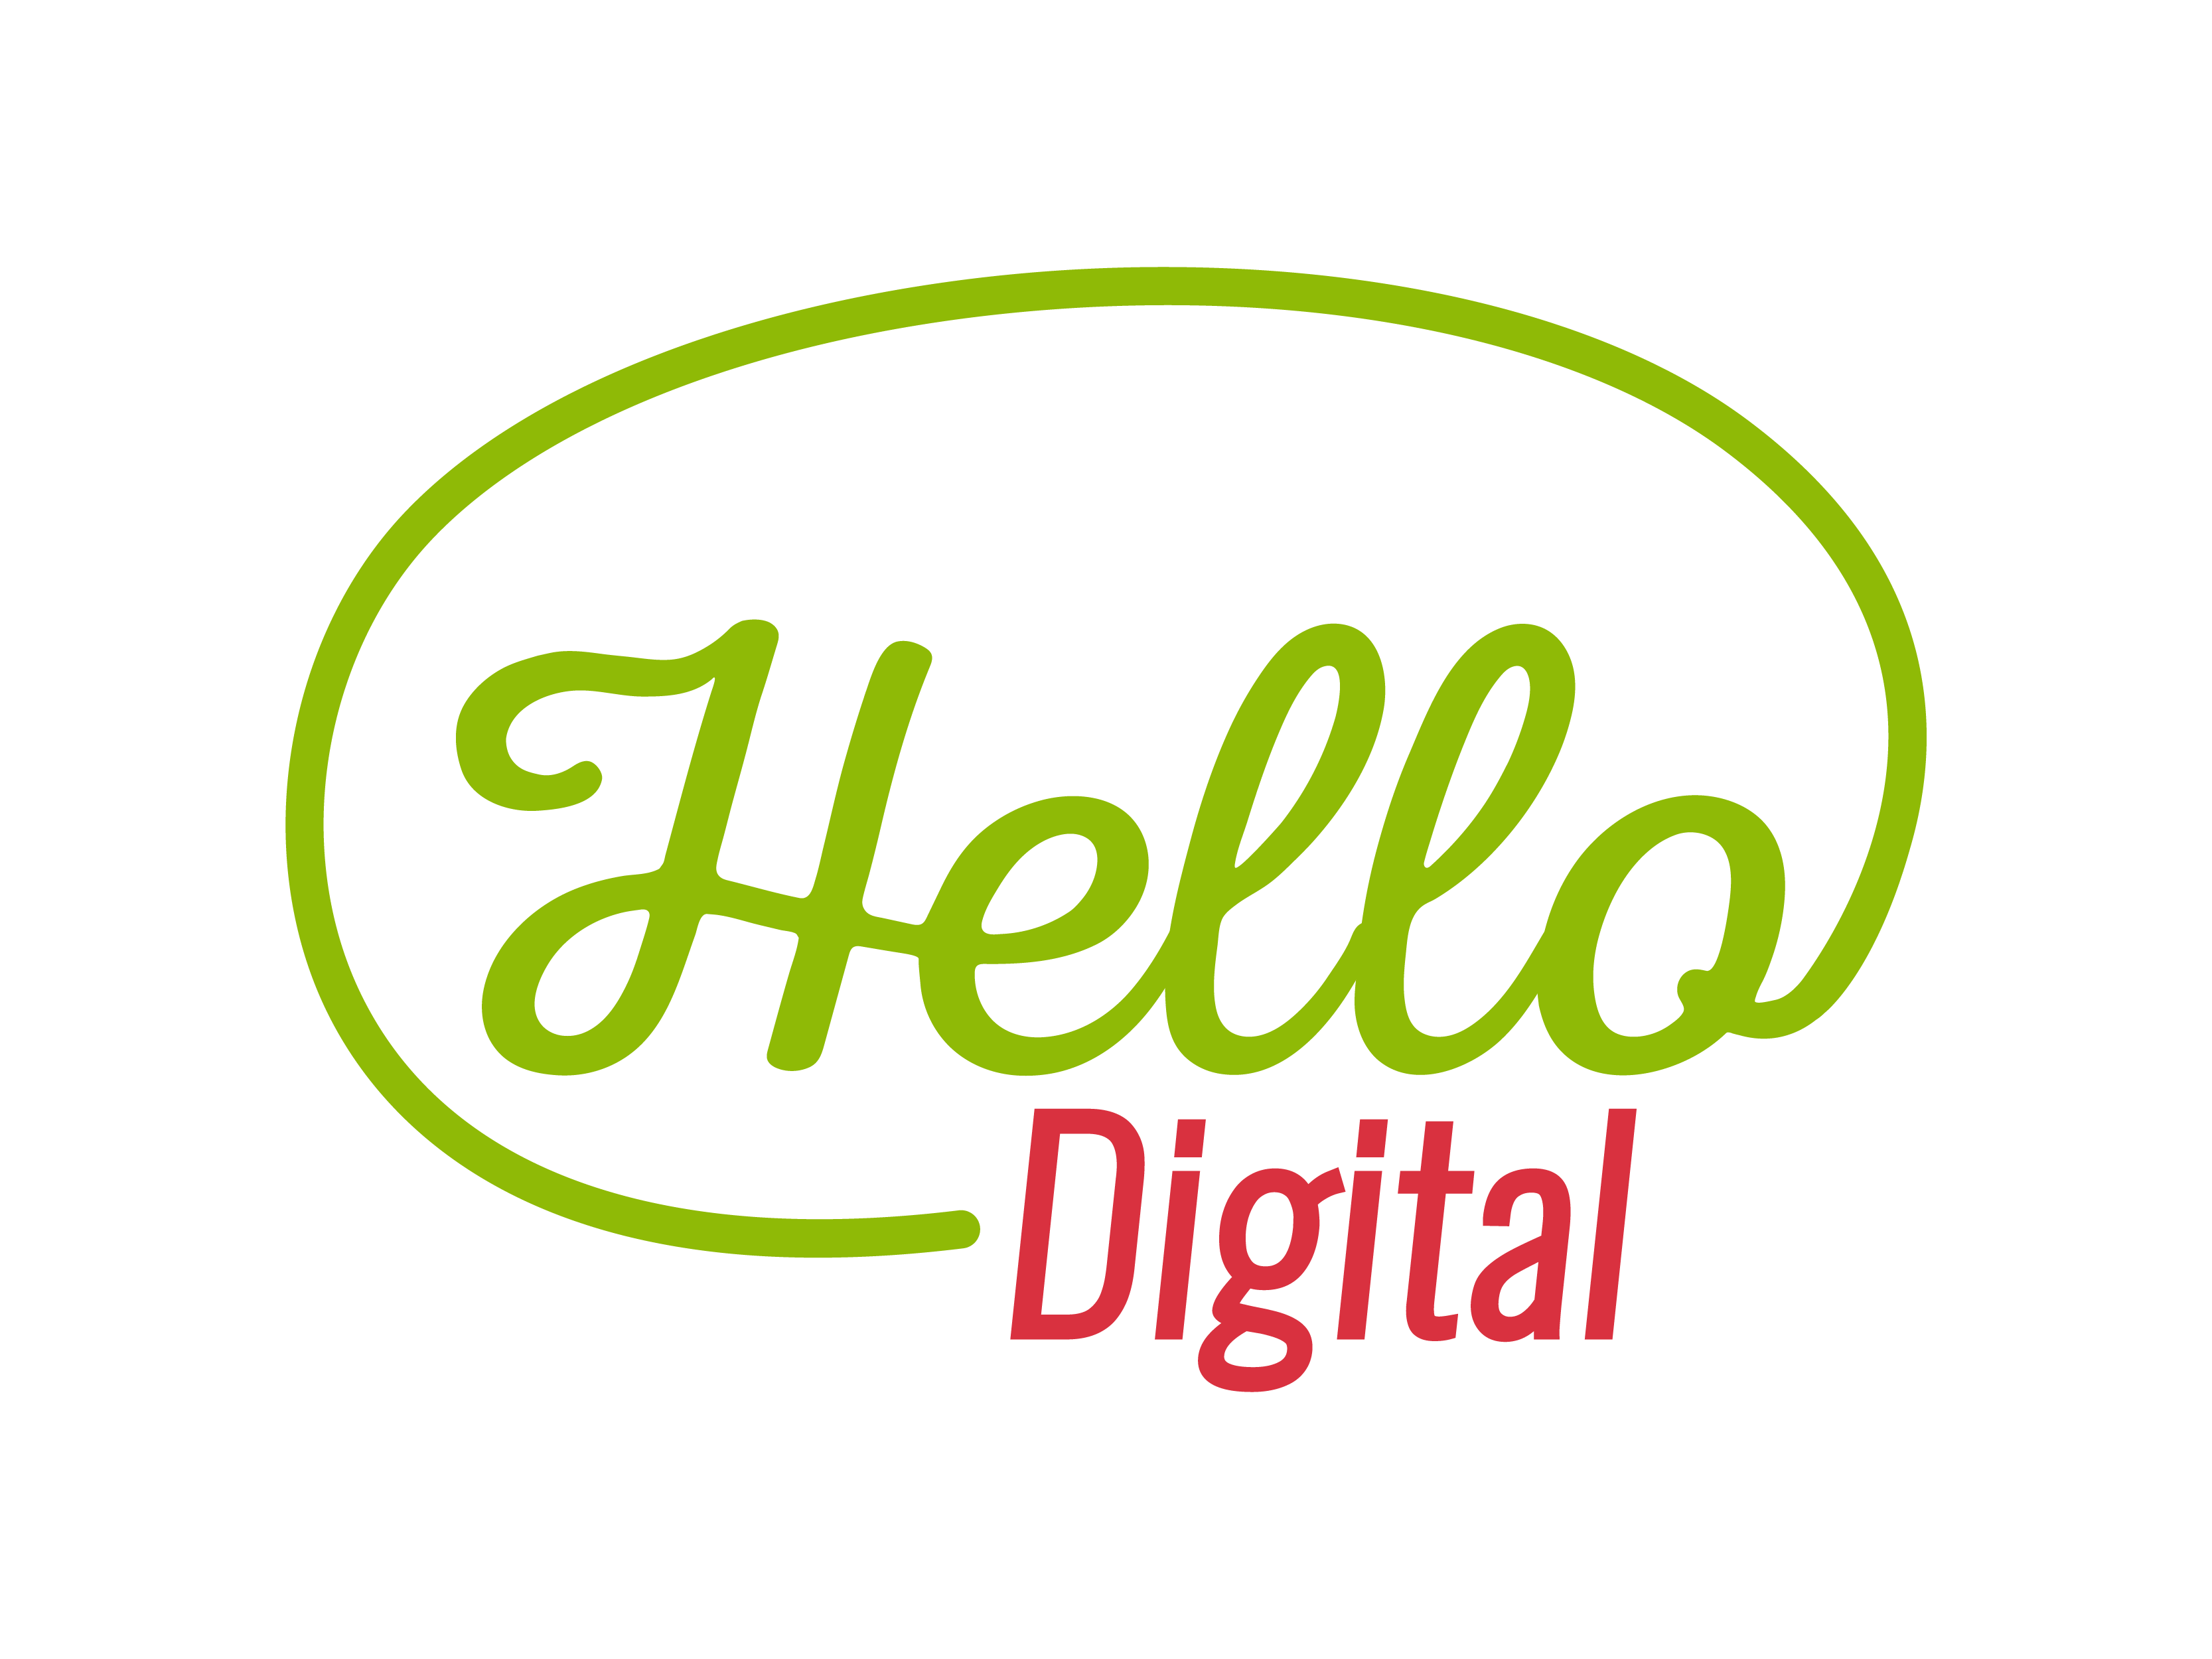 Hello Digital | Digital Strategy | London